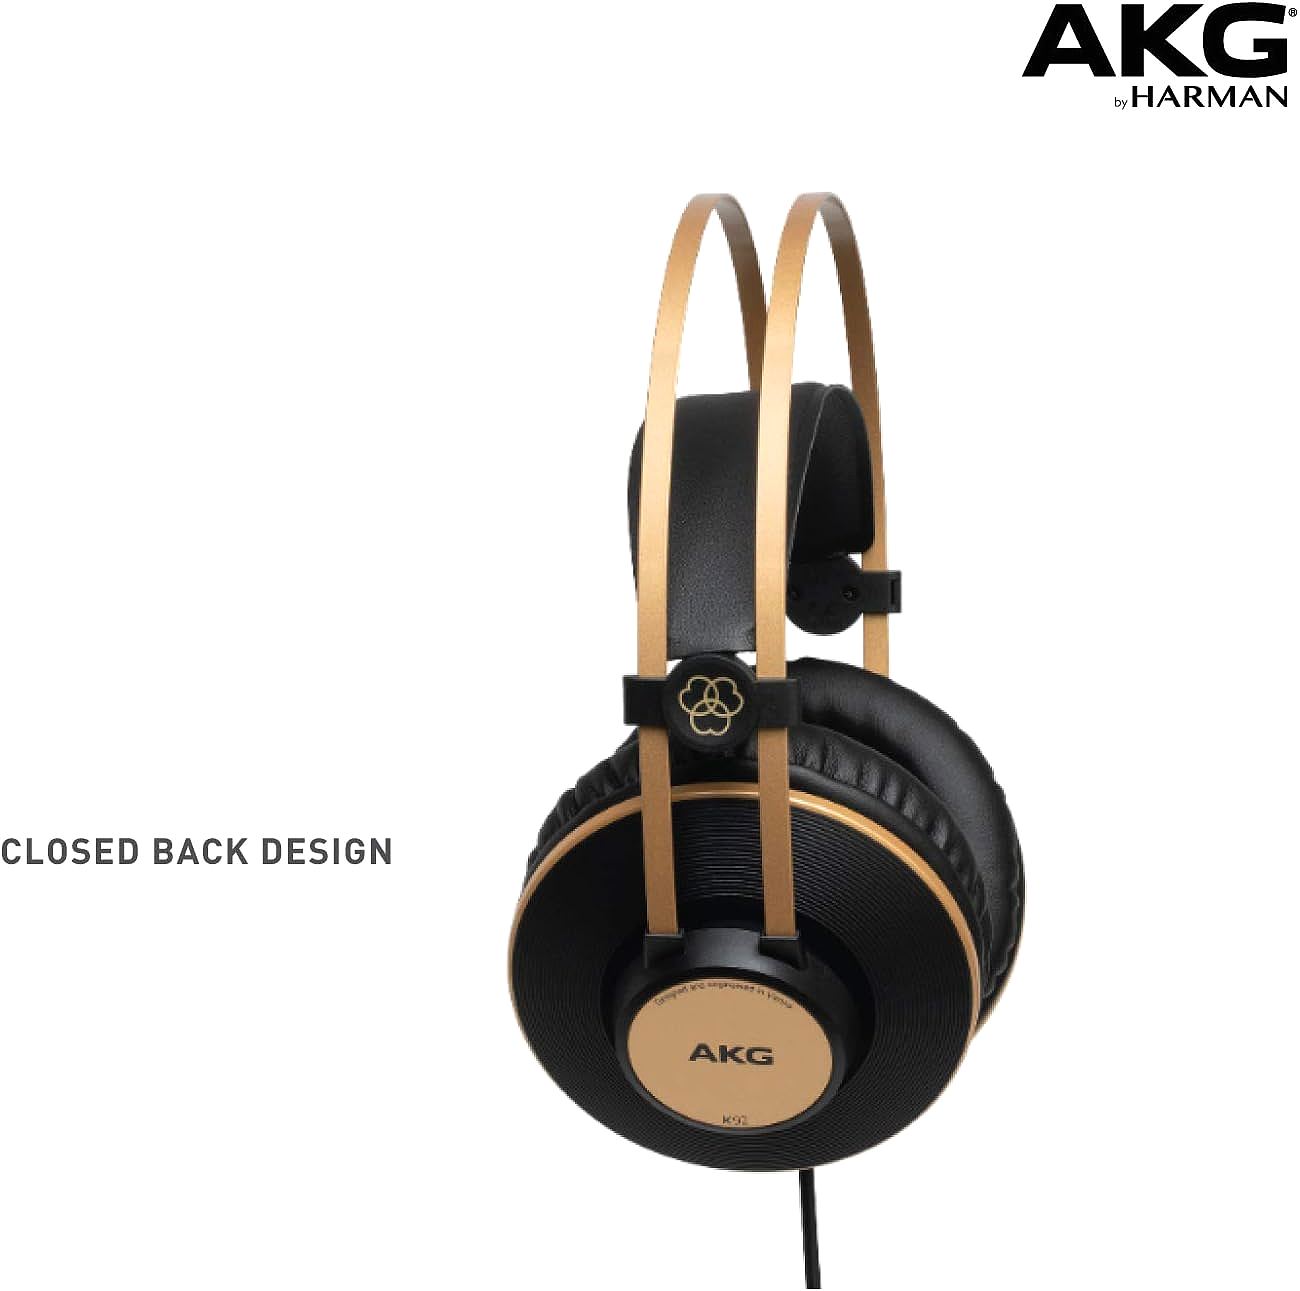   AKG Pro Audio K92 Over-Ear Headphones   